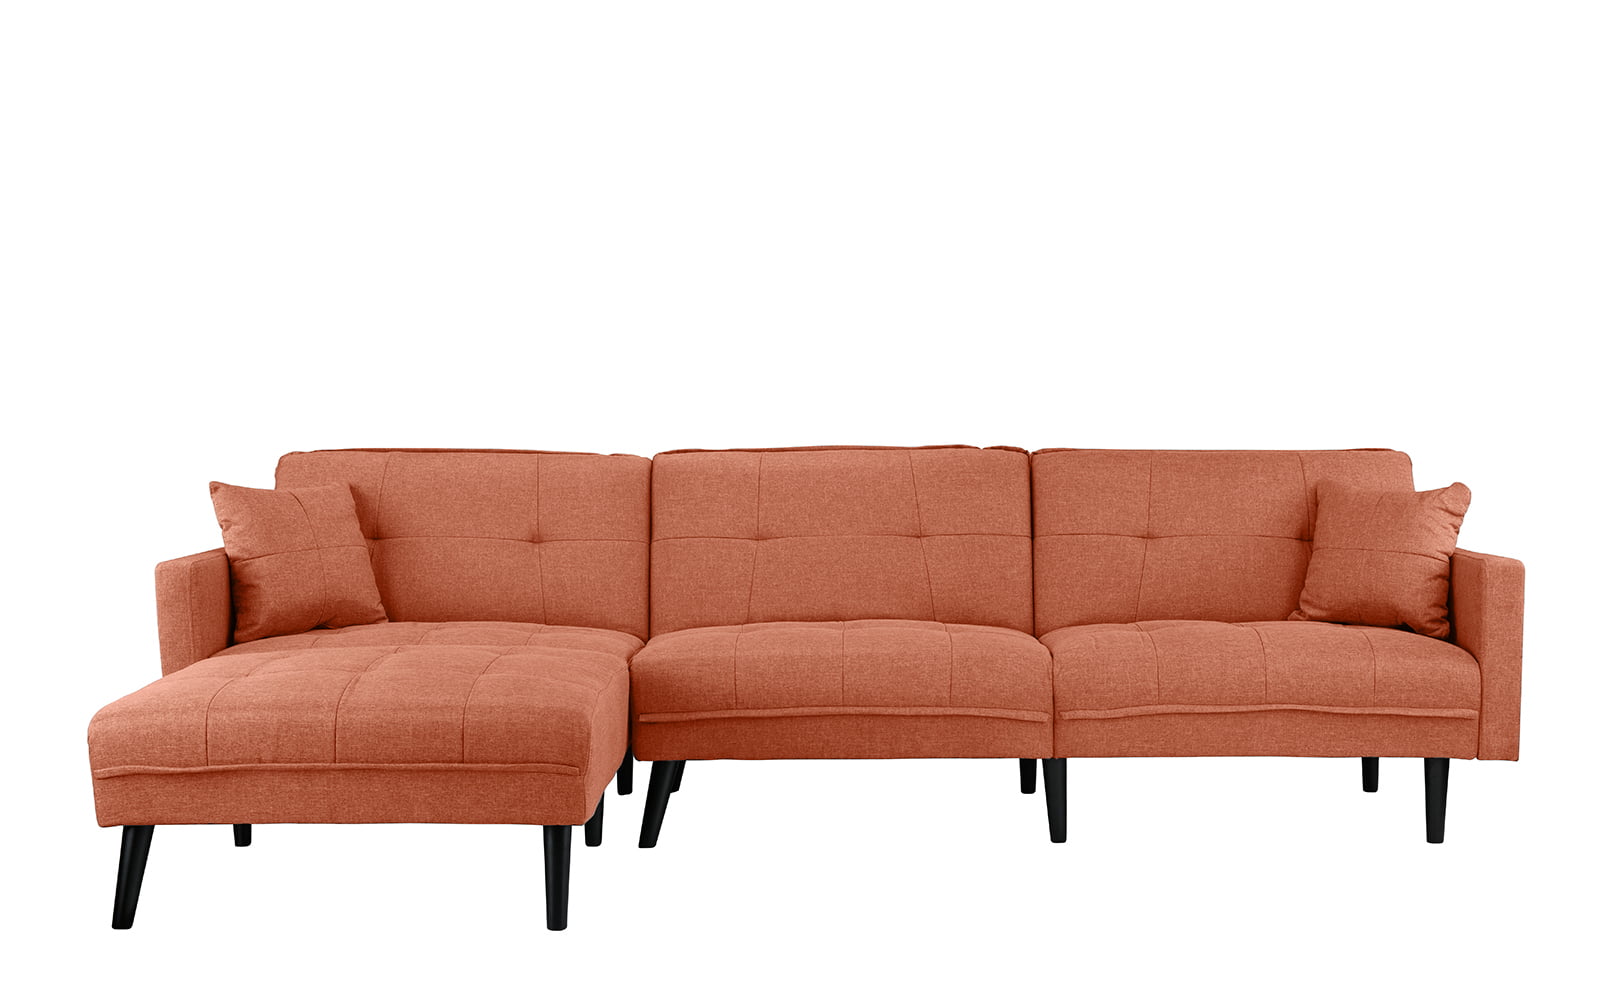 mid century modern futon sofa bed with footstool